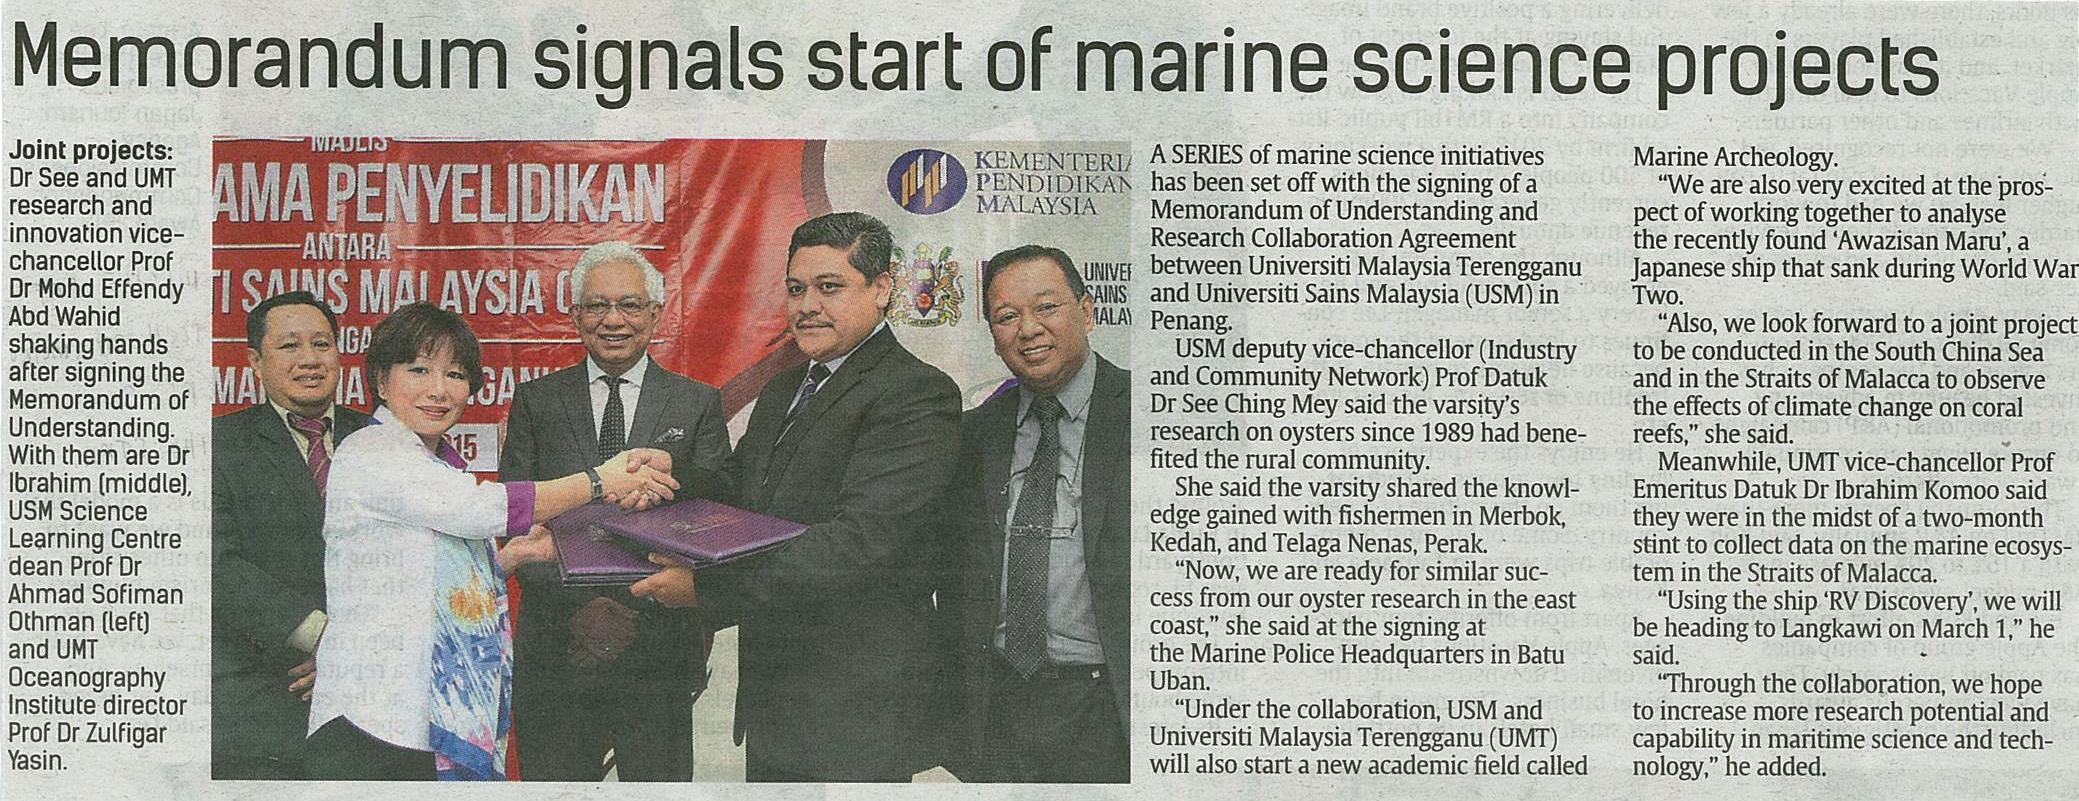 14 Februari 2015 Memorandum signals start of marine scienve projects The Star